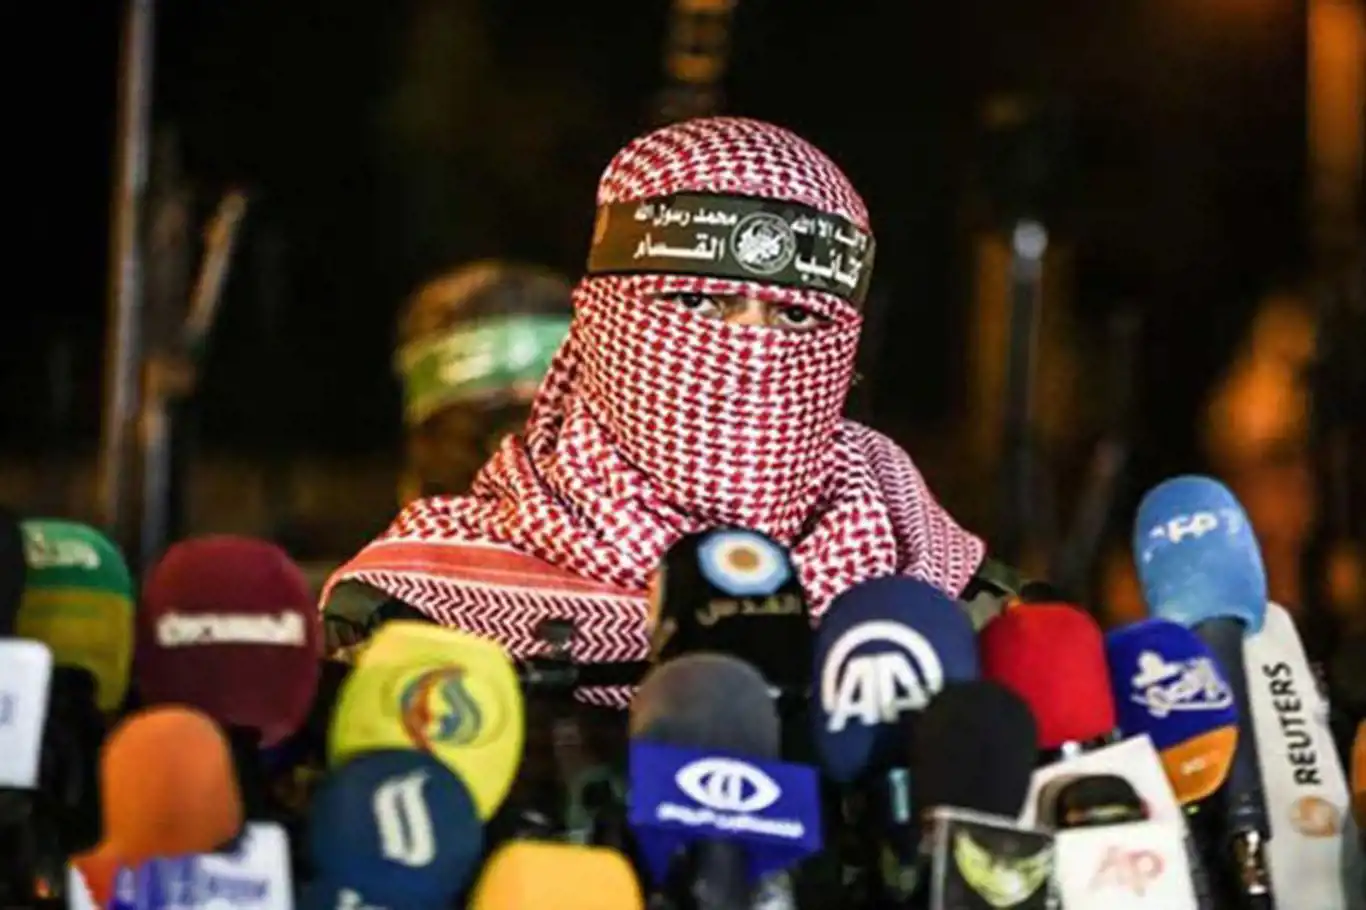 Abu Obeida: We are prepared for a long battle